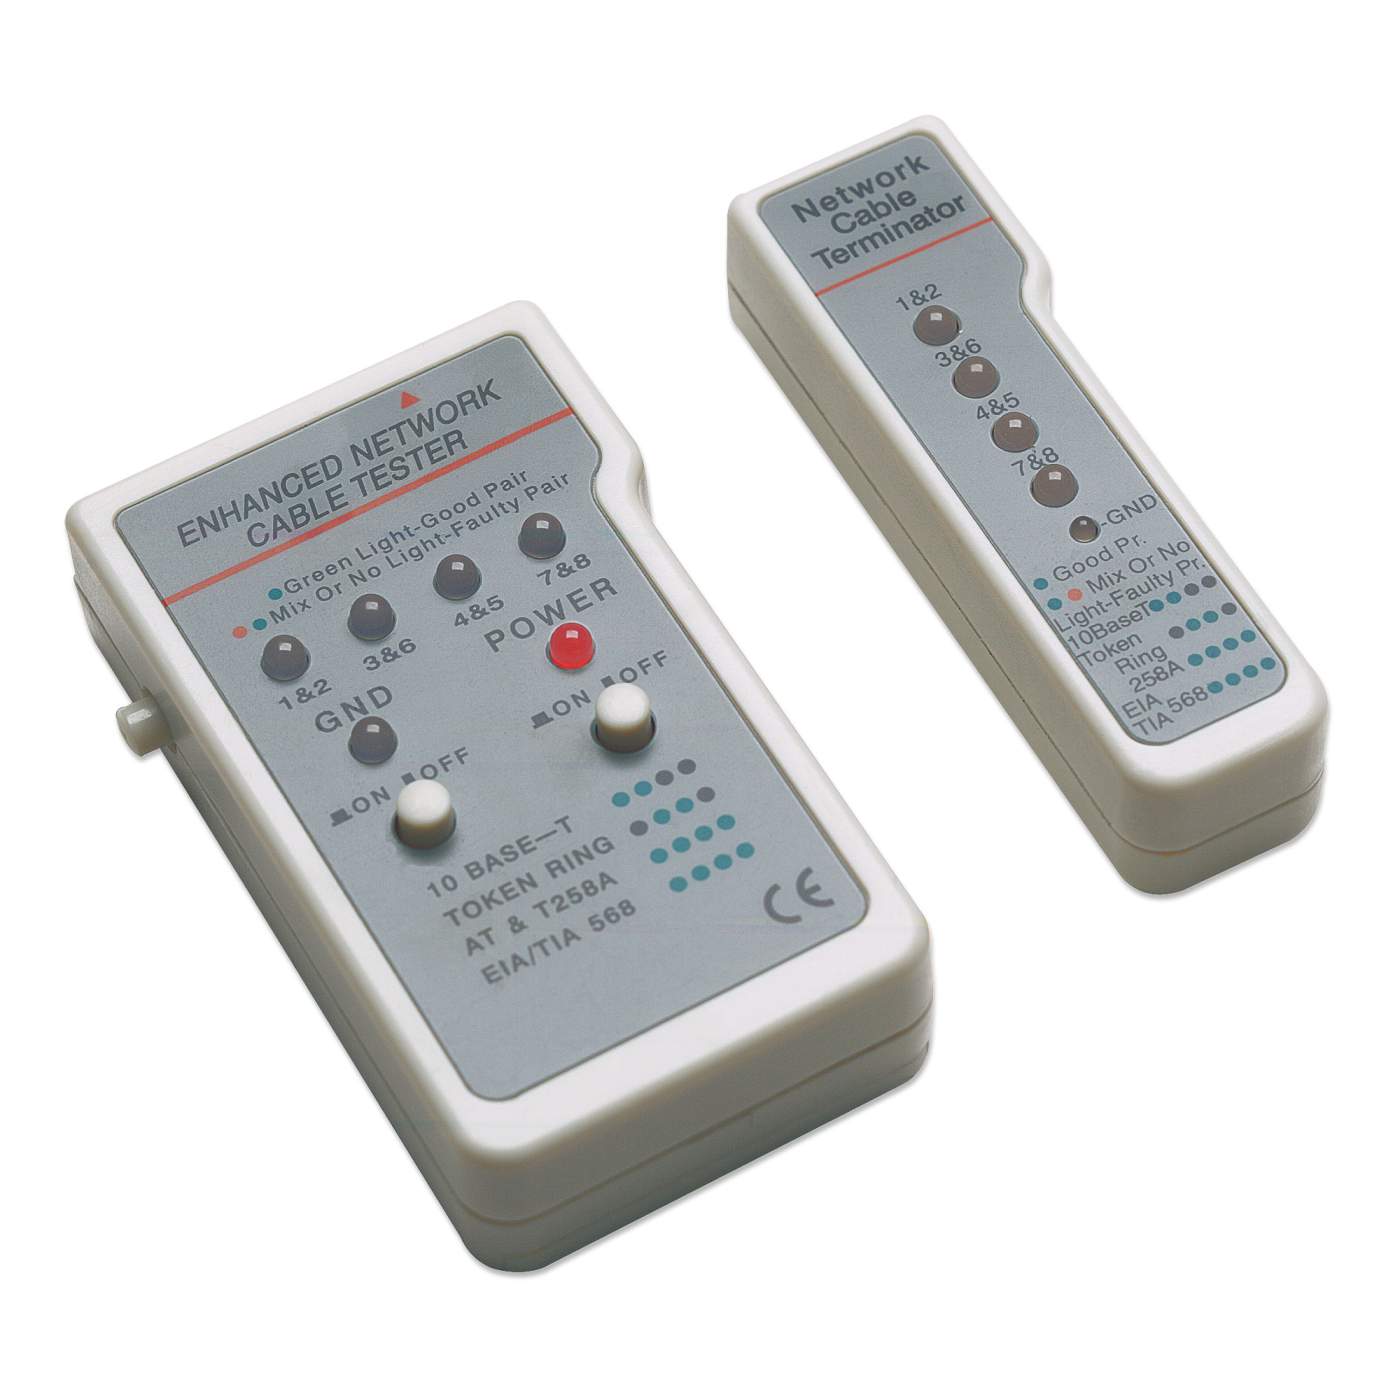 Testeur de câble 4 en 1 (RJ11 / RJ 45 / BNC / USB) (351911)